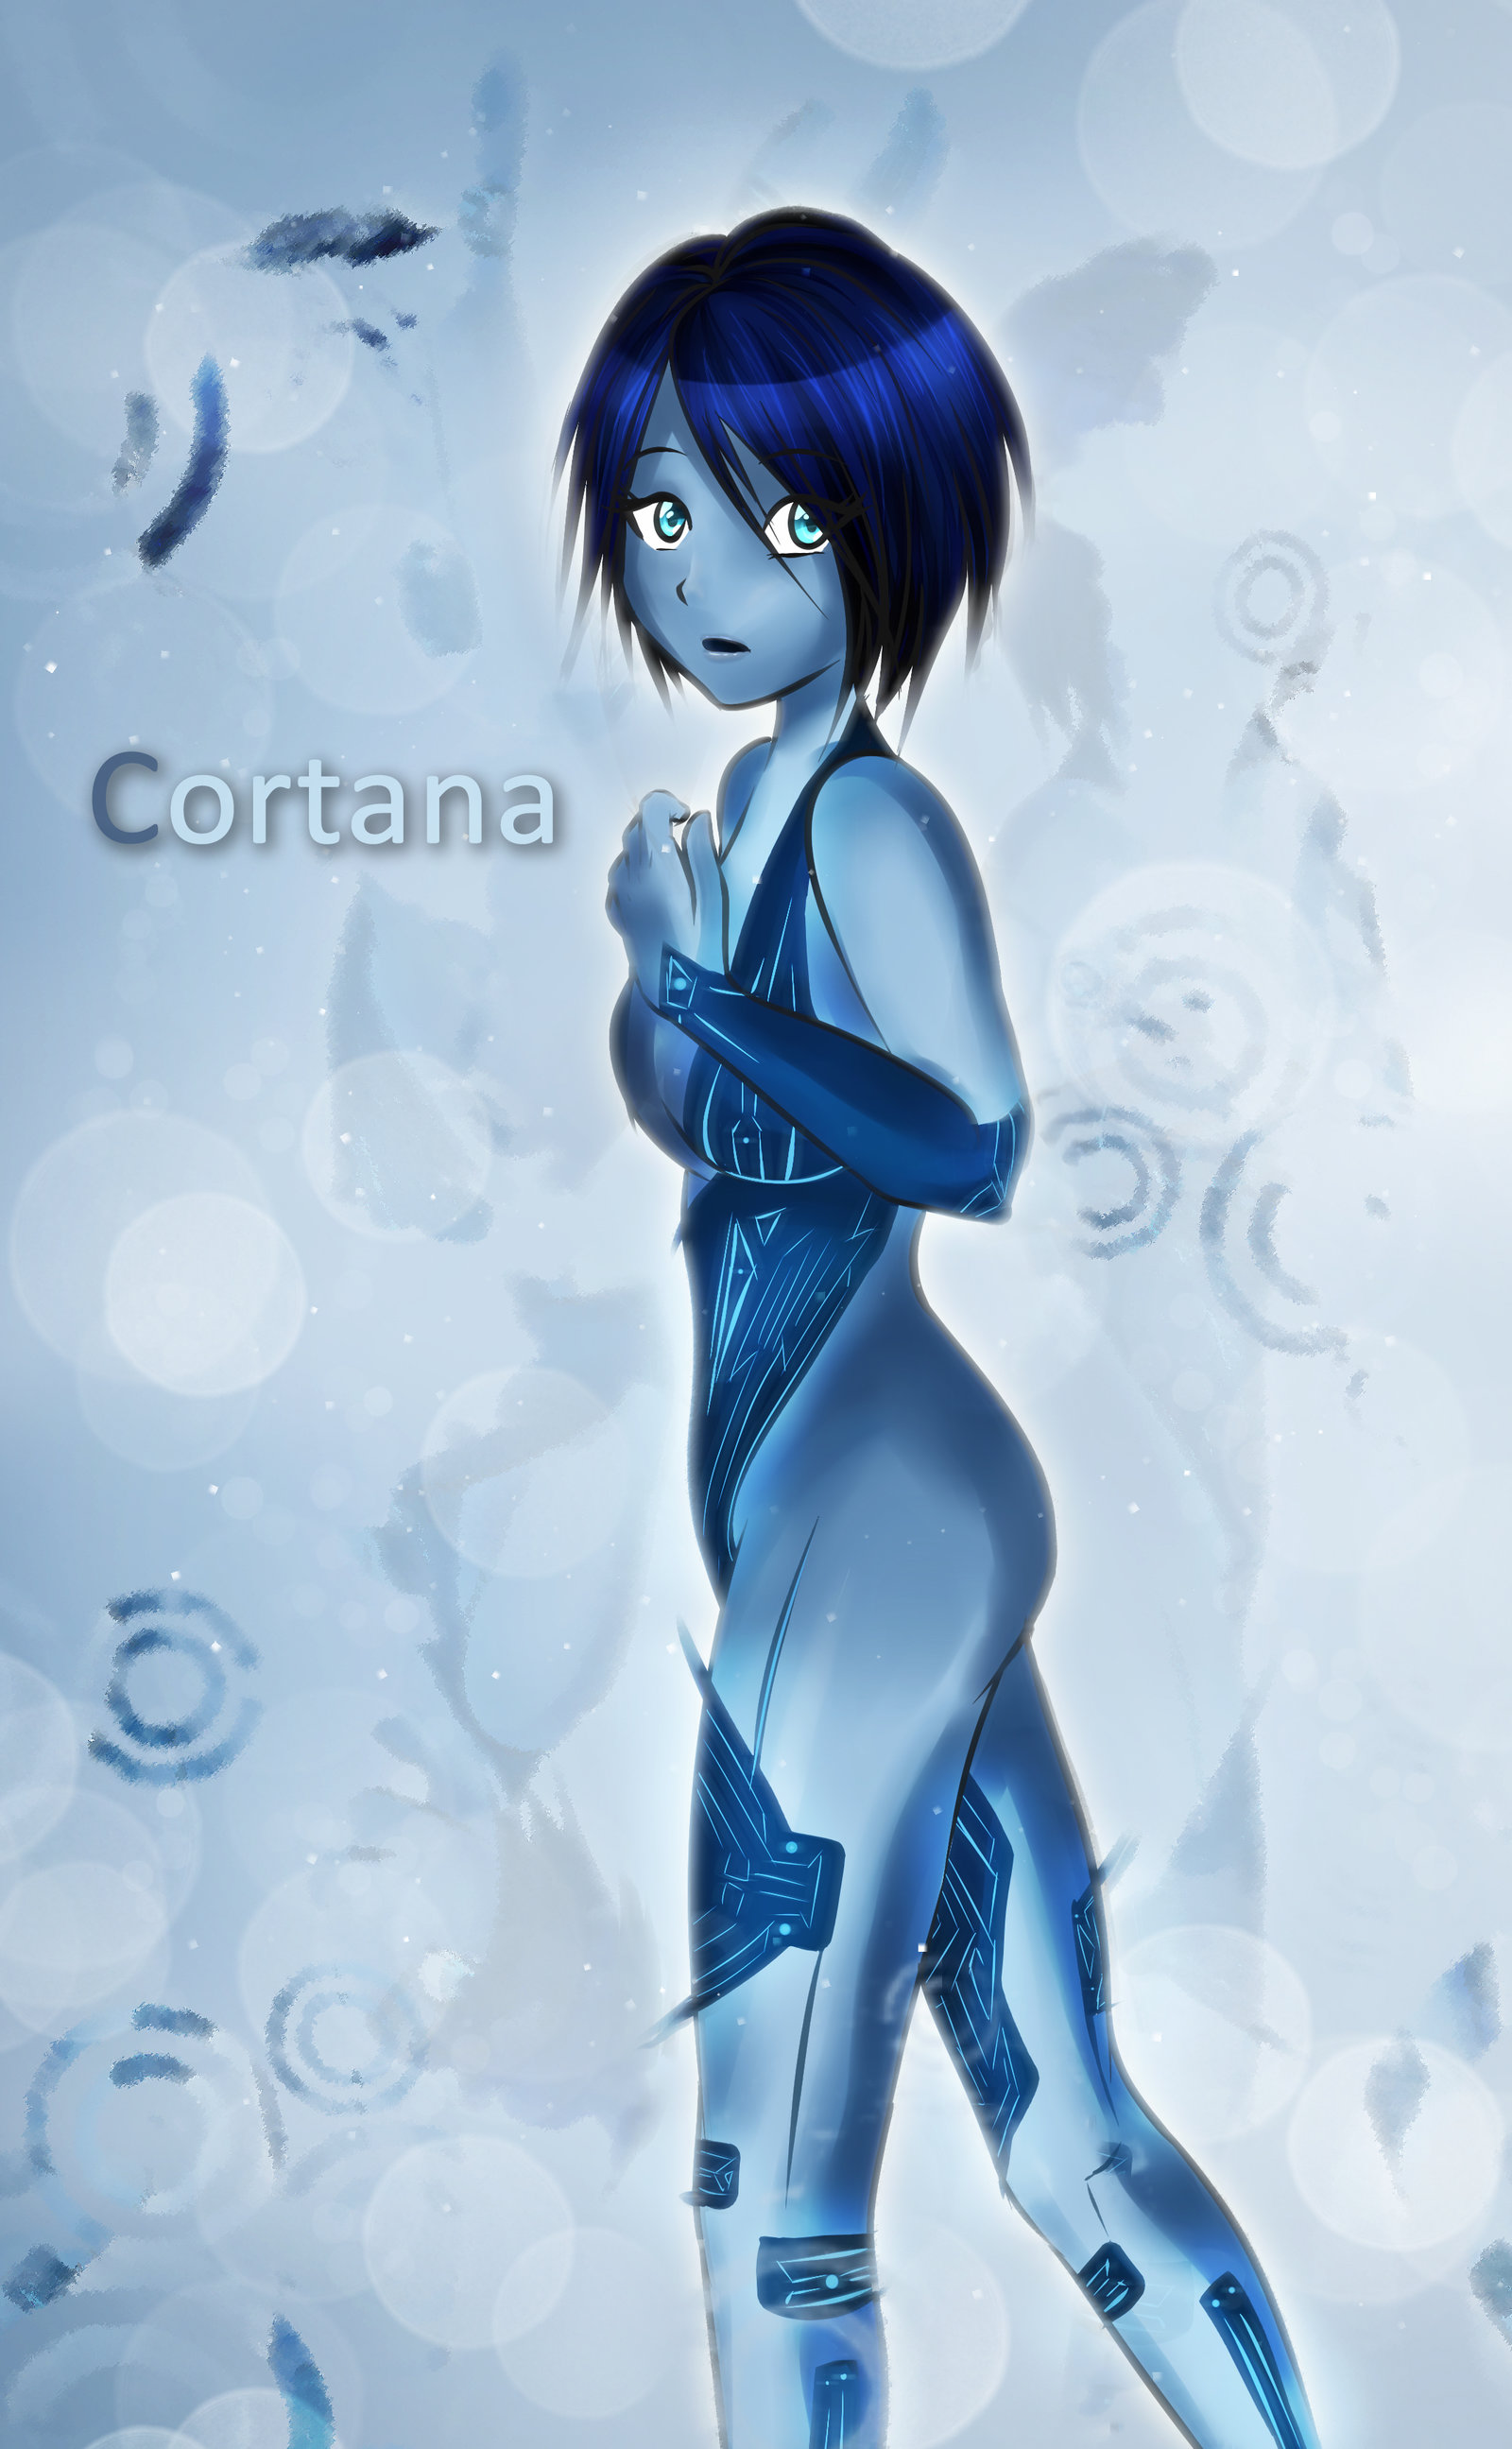 Cortana [Request] by DarkWereKitty on